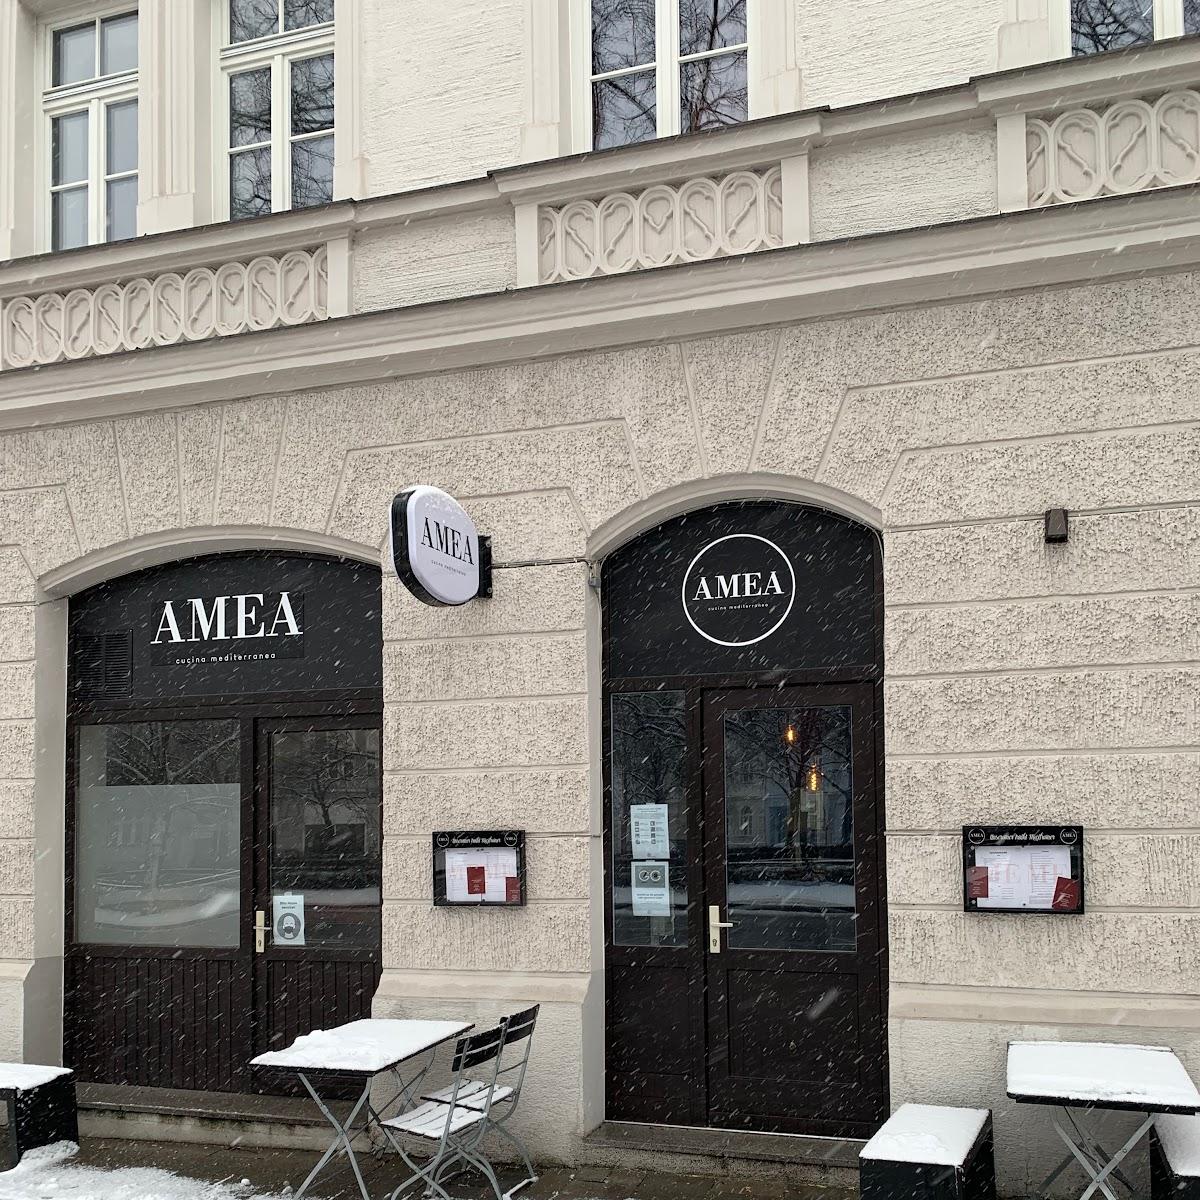 Restaurant "AMEA" in München